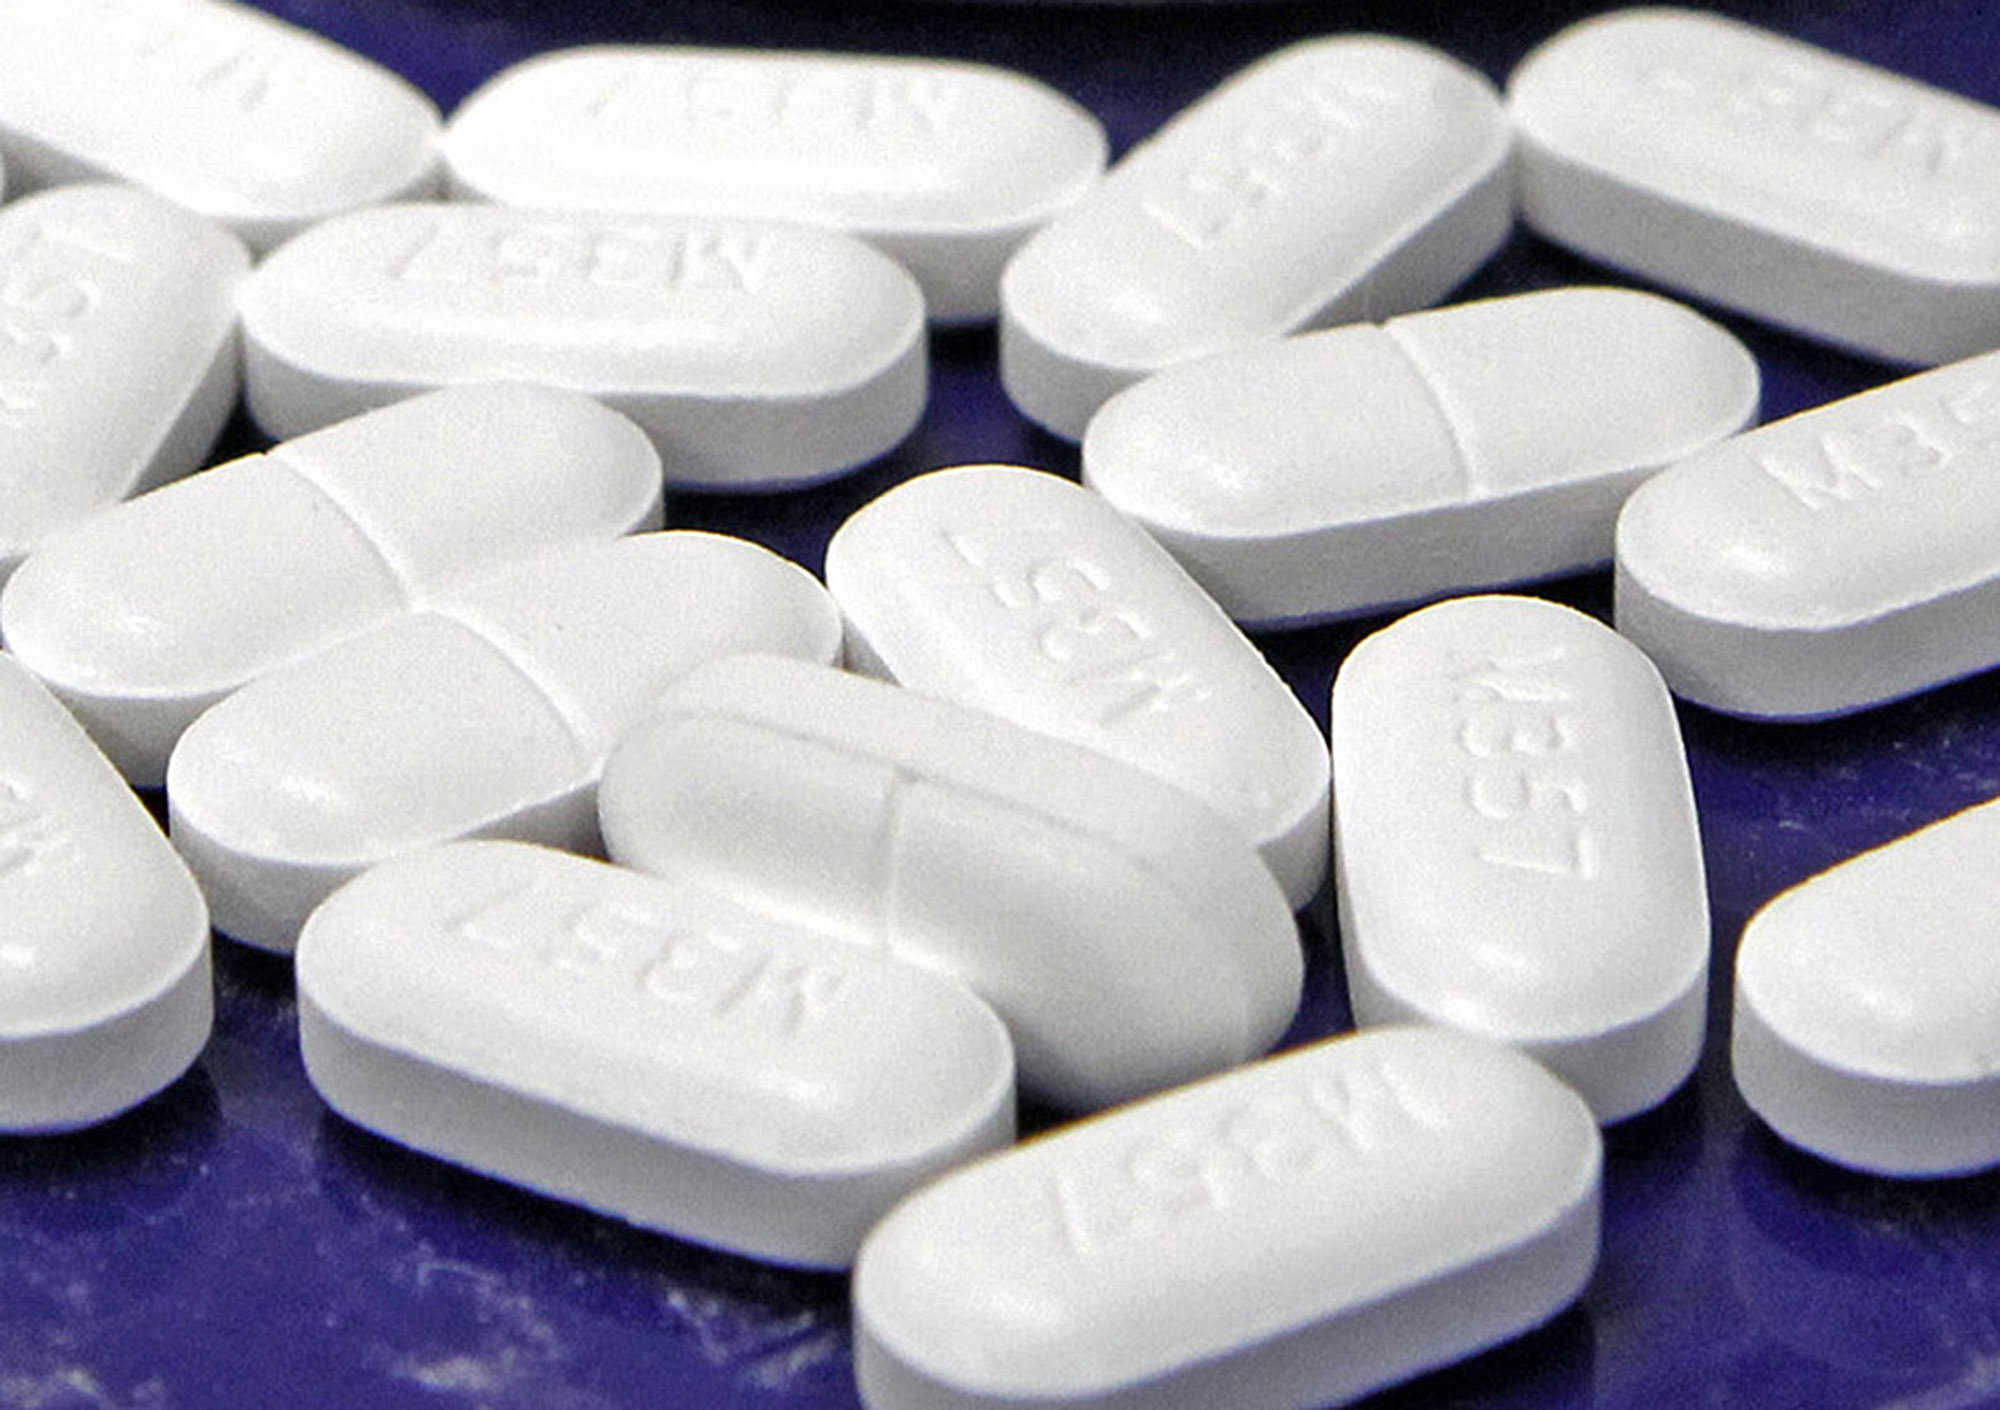 hydrocodone-acetaminophen pills